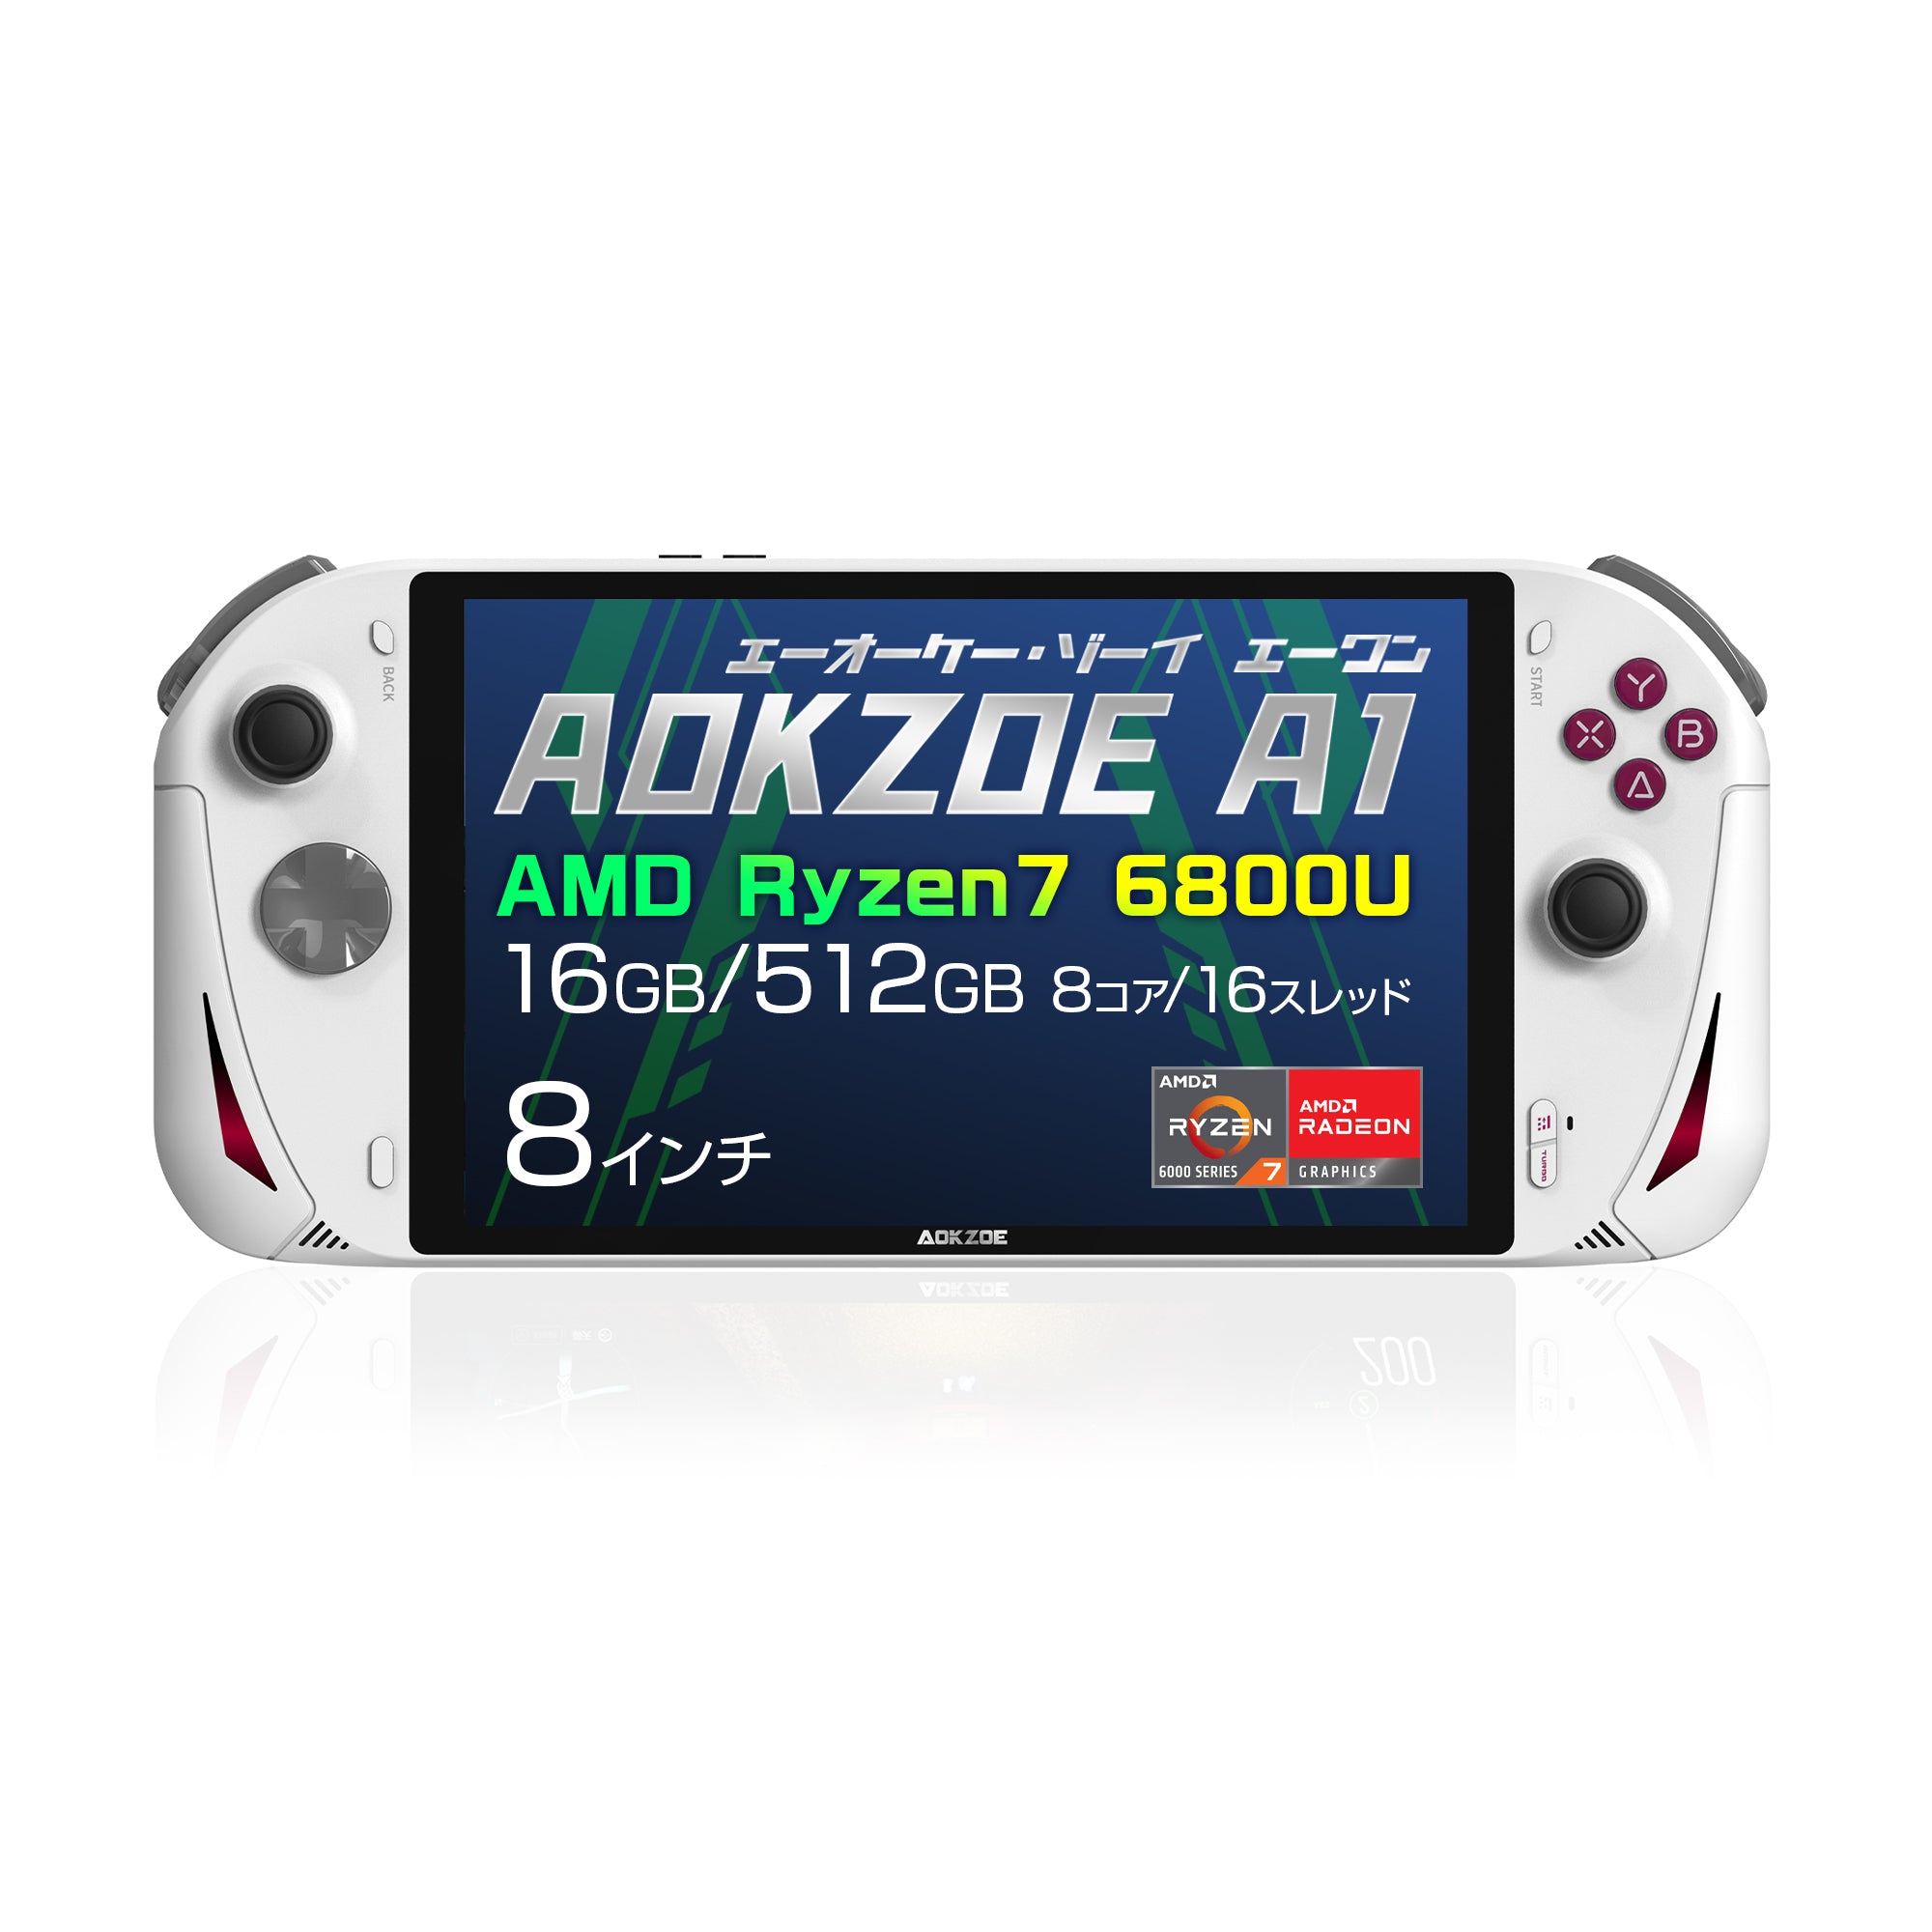 AOKZOE A1 ルナホワイト Ryzen 6800U – ハイビーム 公式オンラインストア